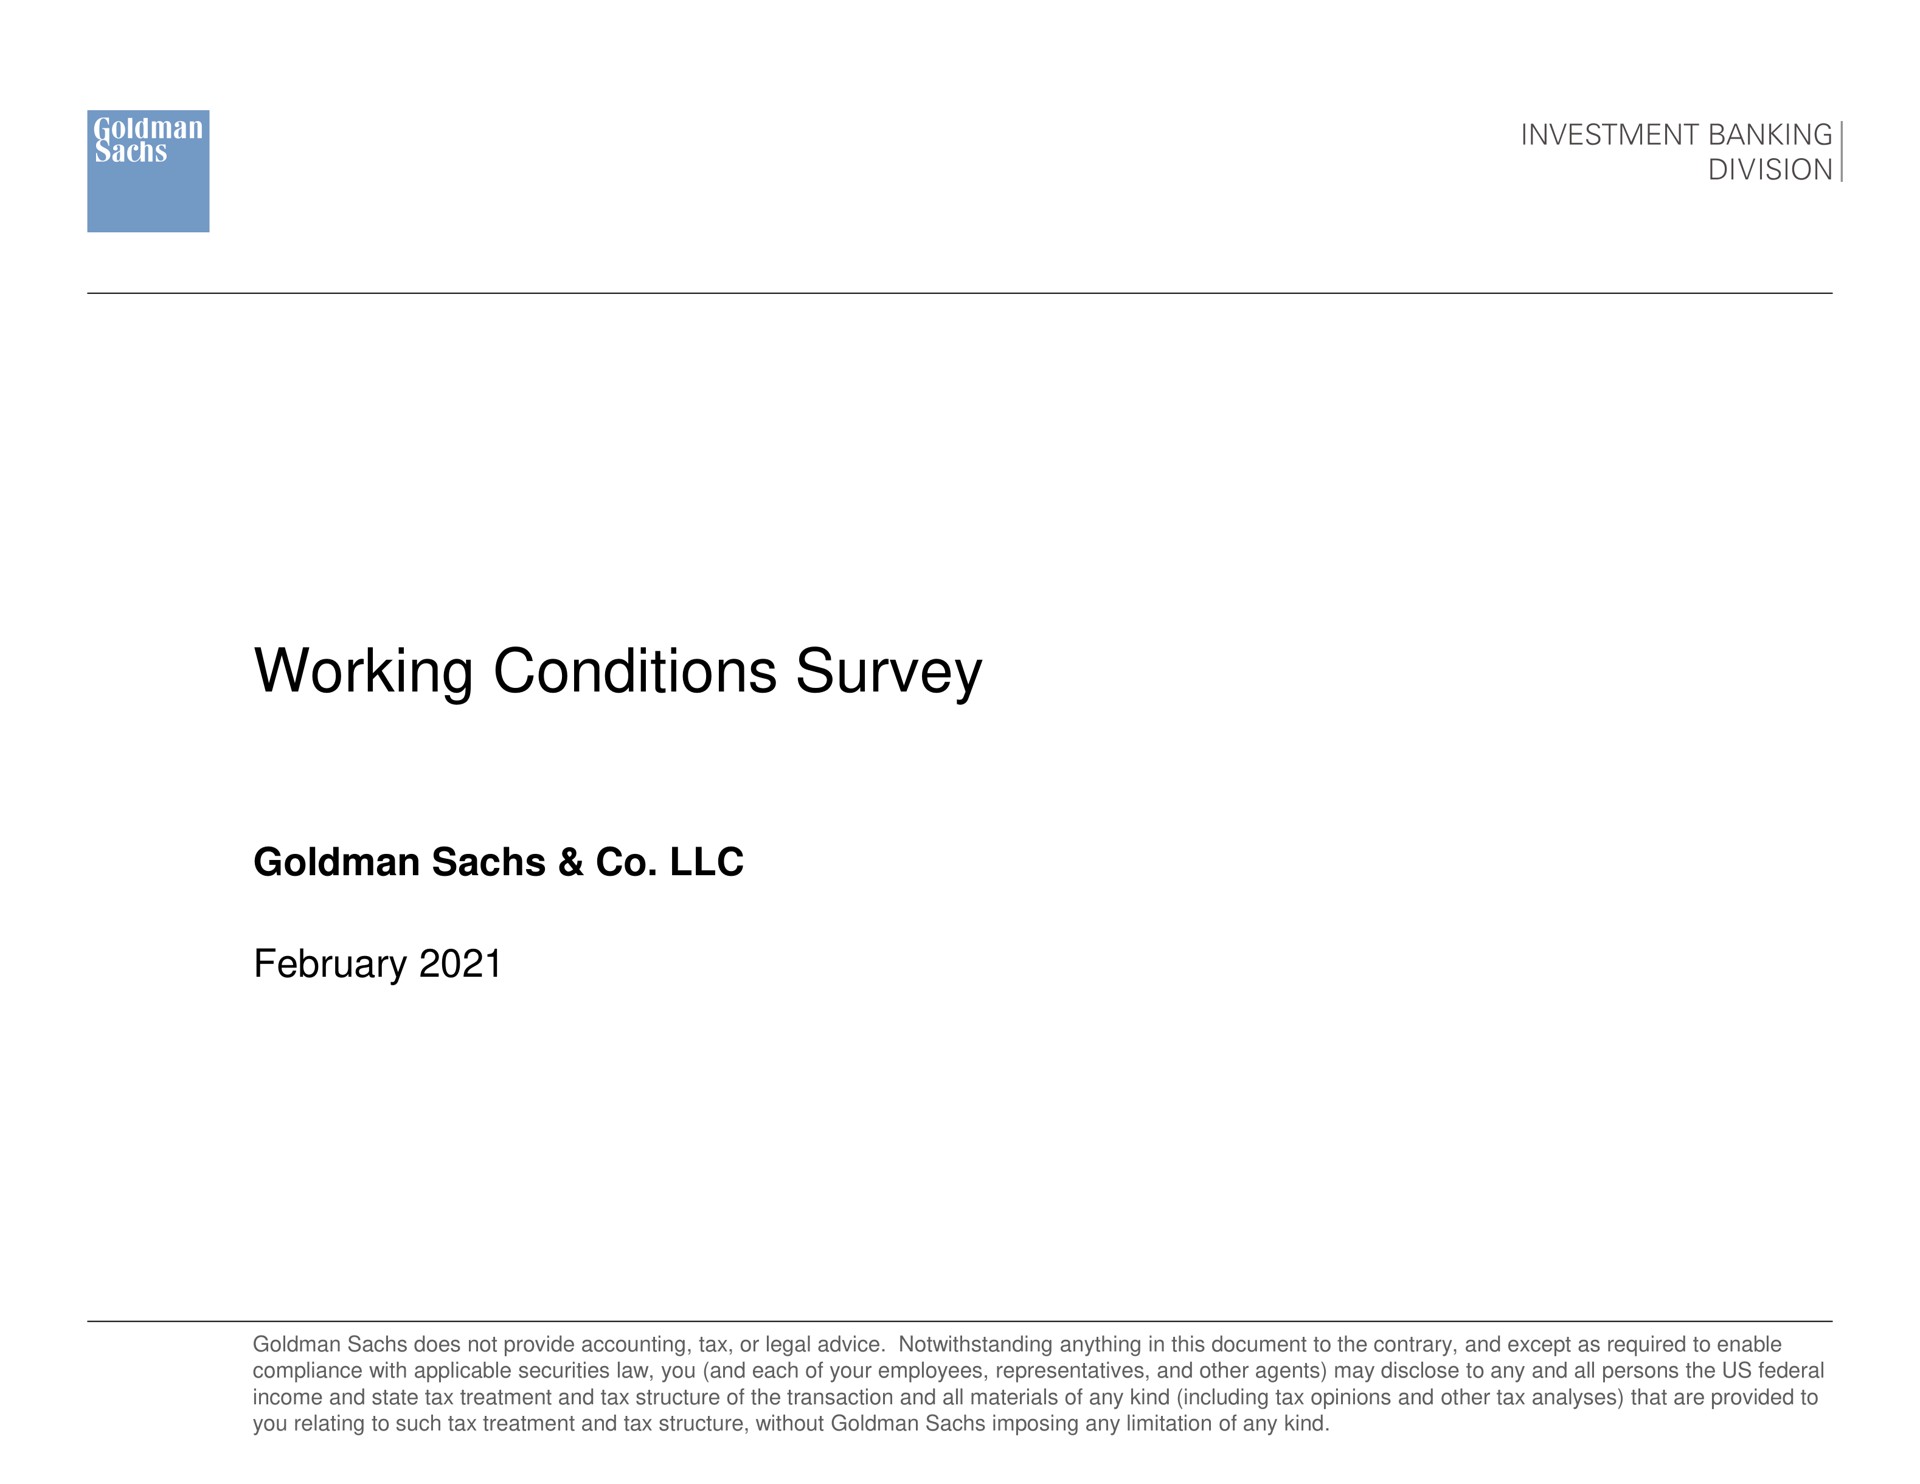 working conditions survey | Goldman Sachs